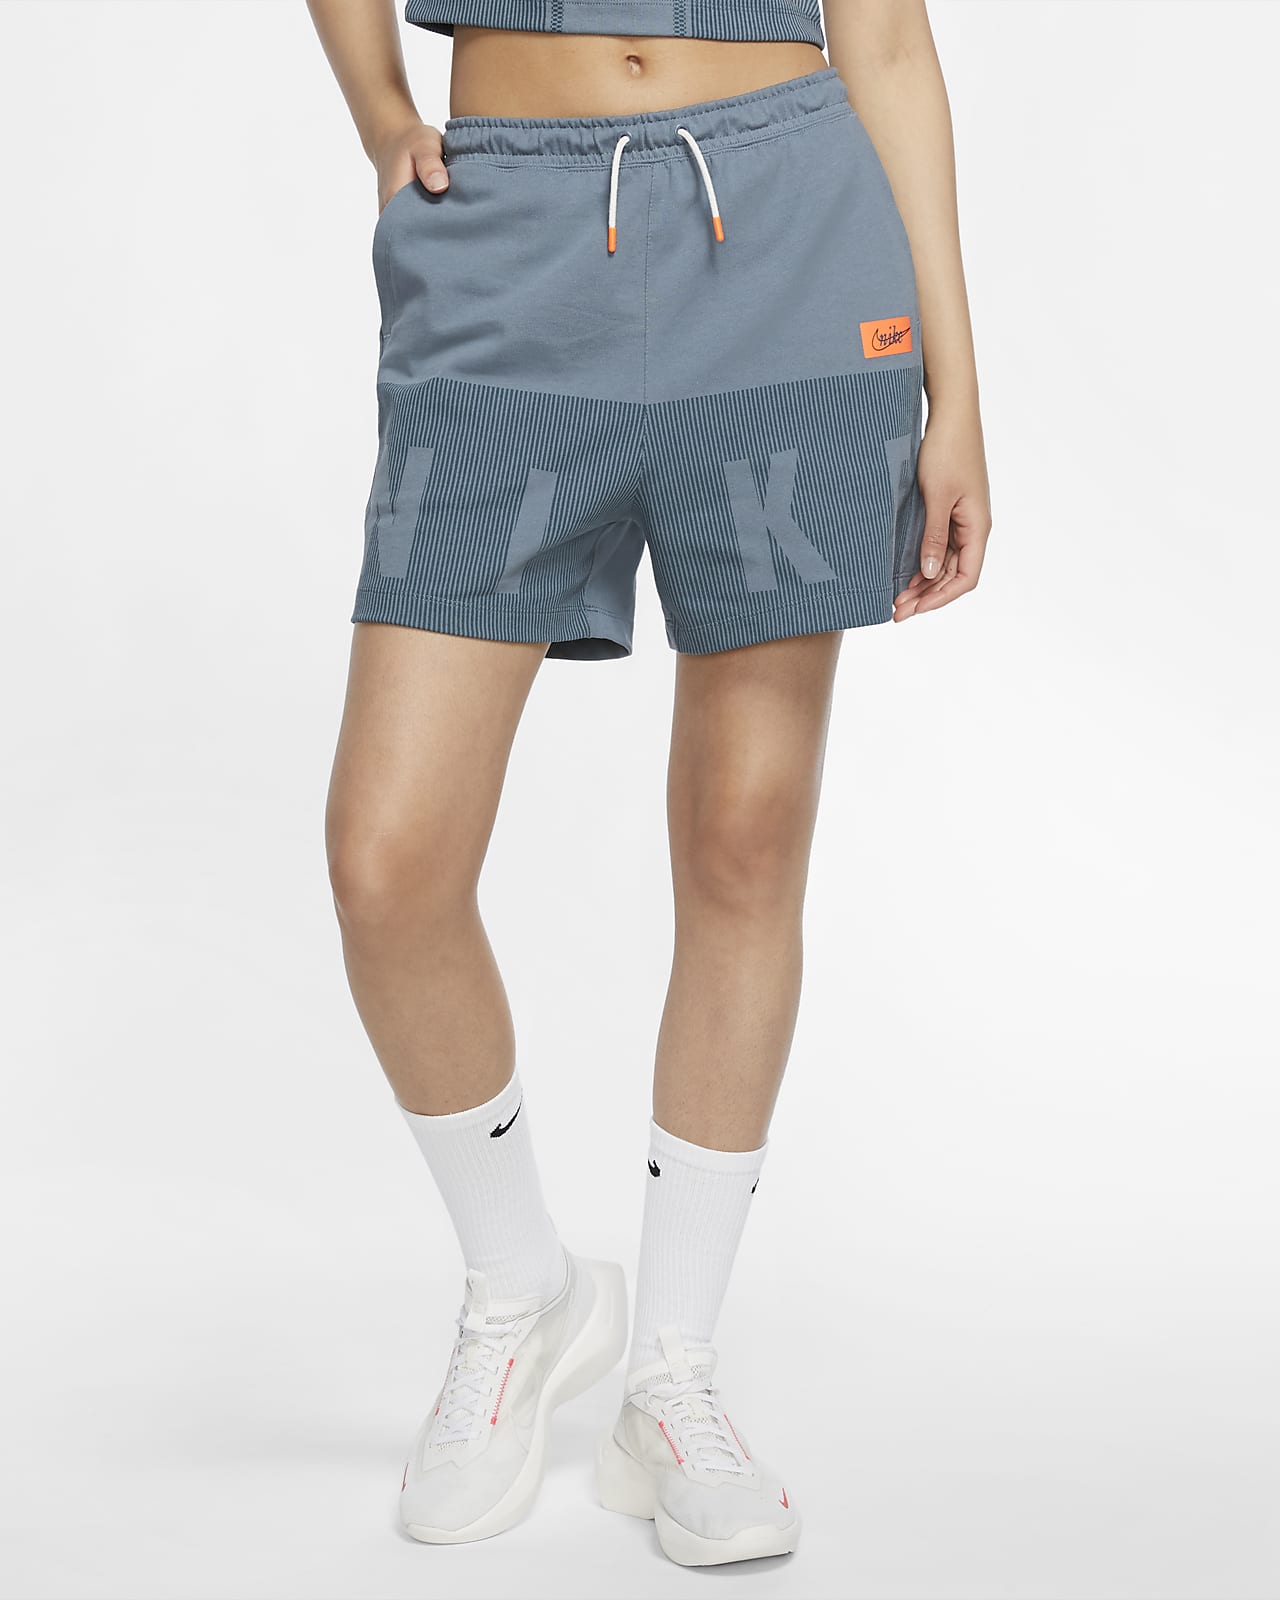 grey jersey shorts womens